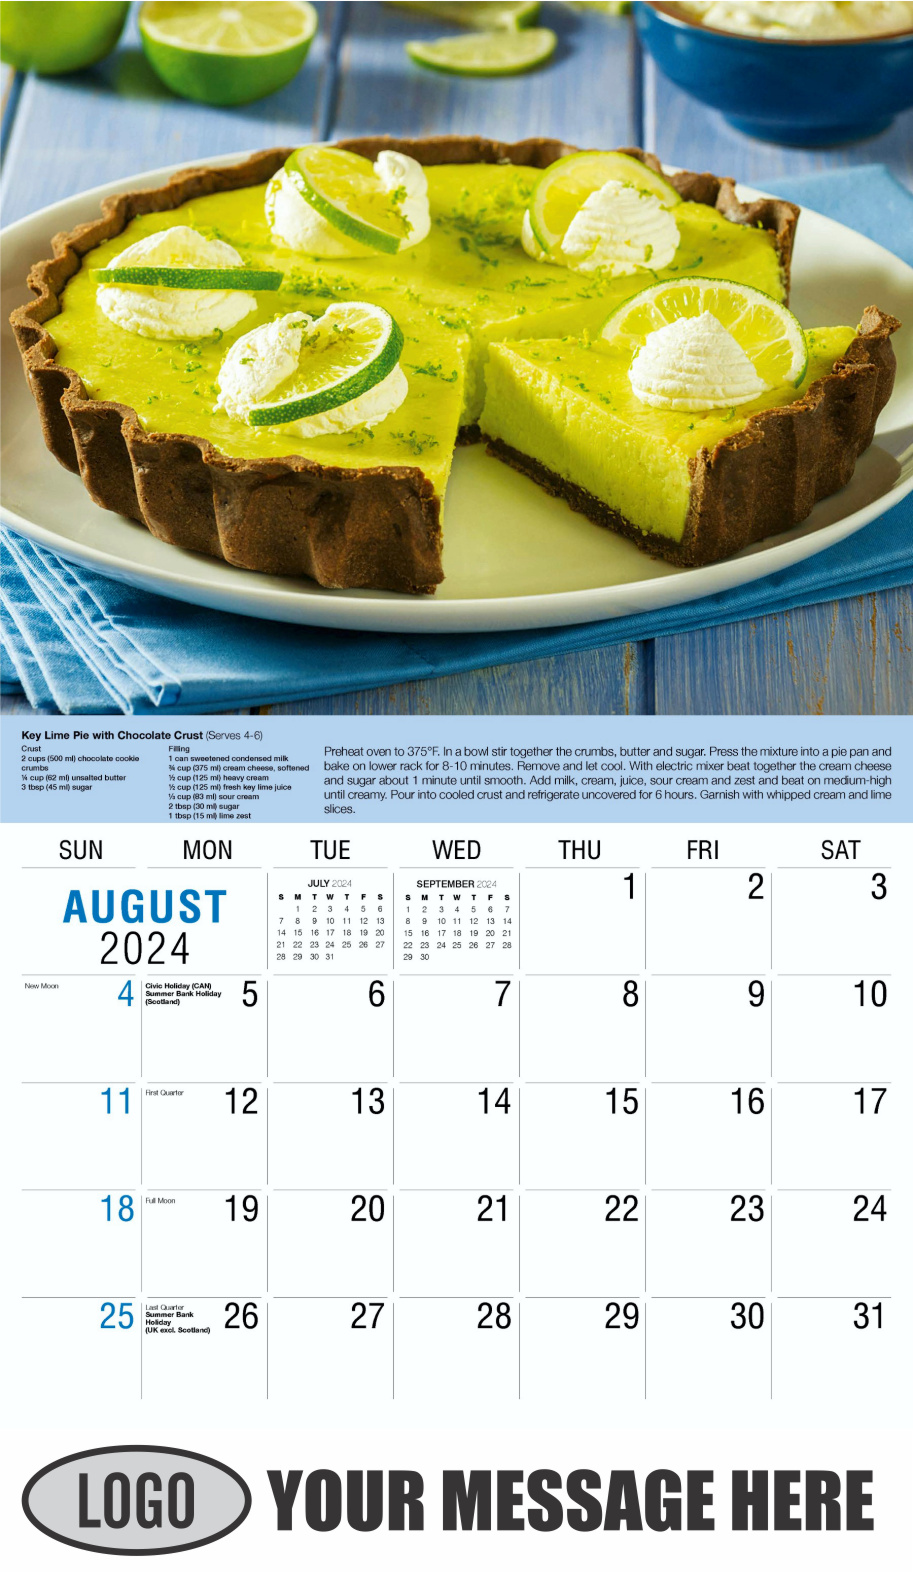 Recipes 2024 Business Promotional Calendar - August